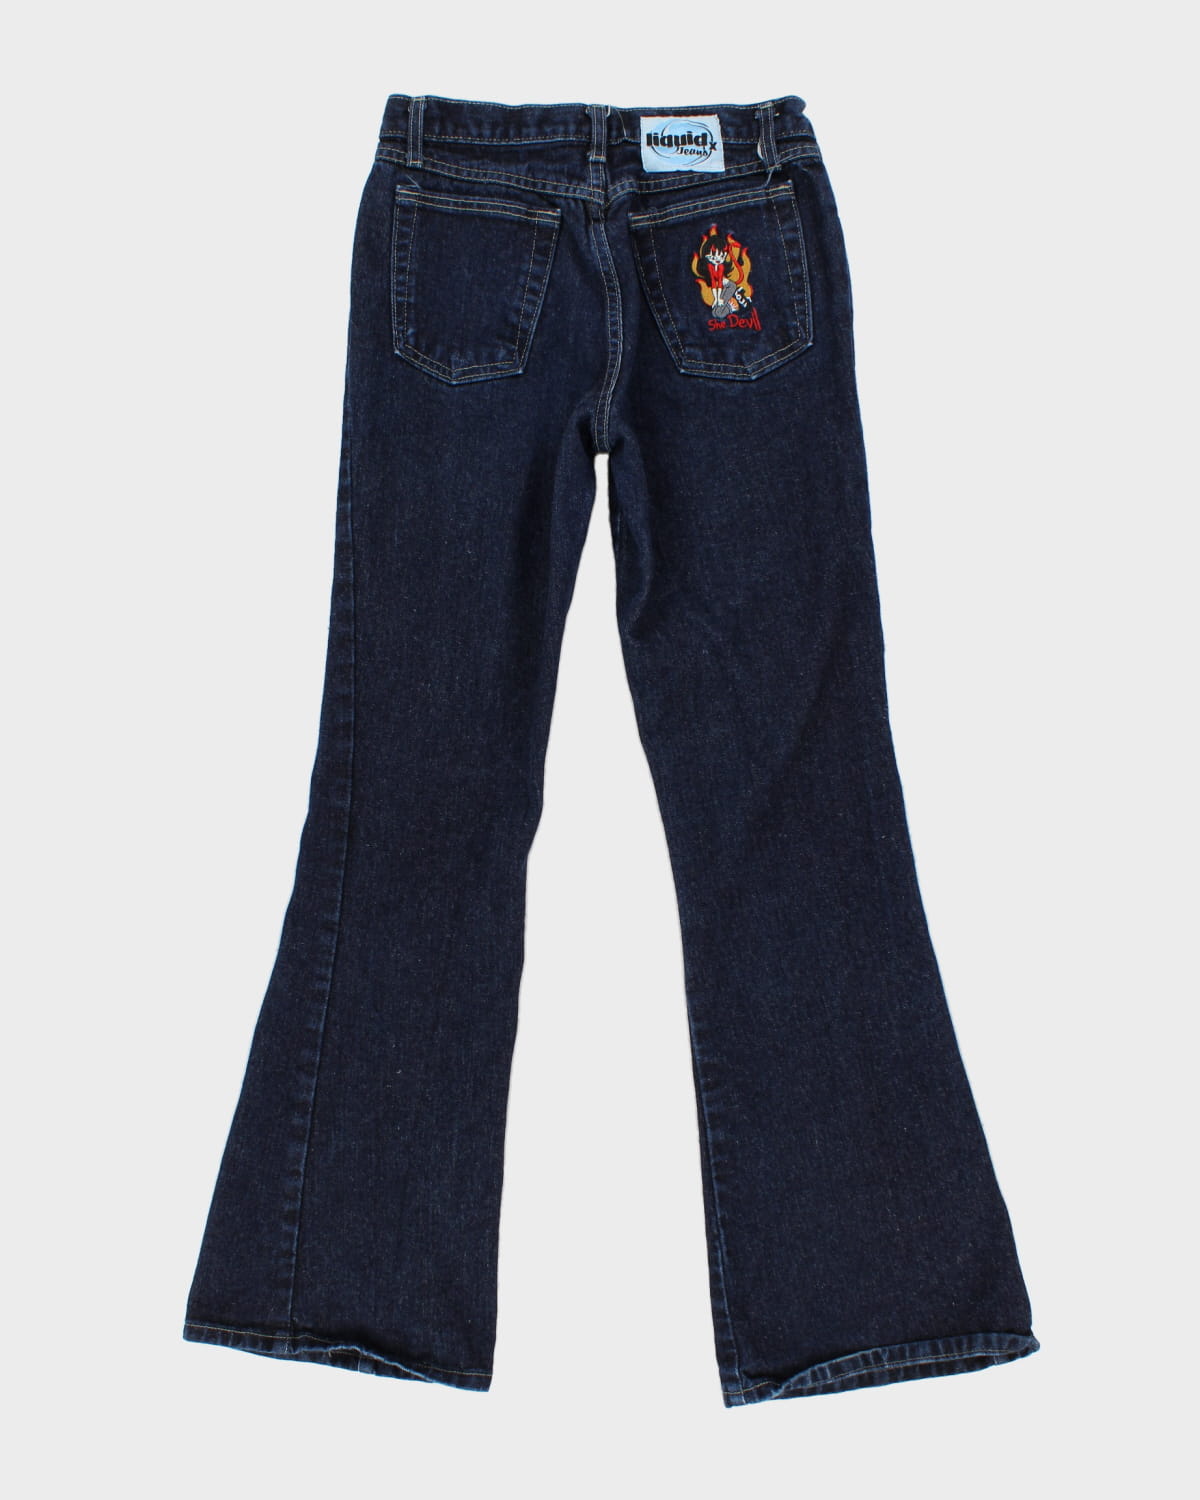 Vintage Liquid X Embroidered Jeans - W30 L32